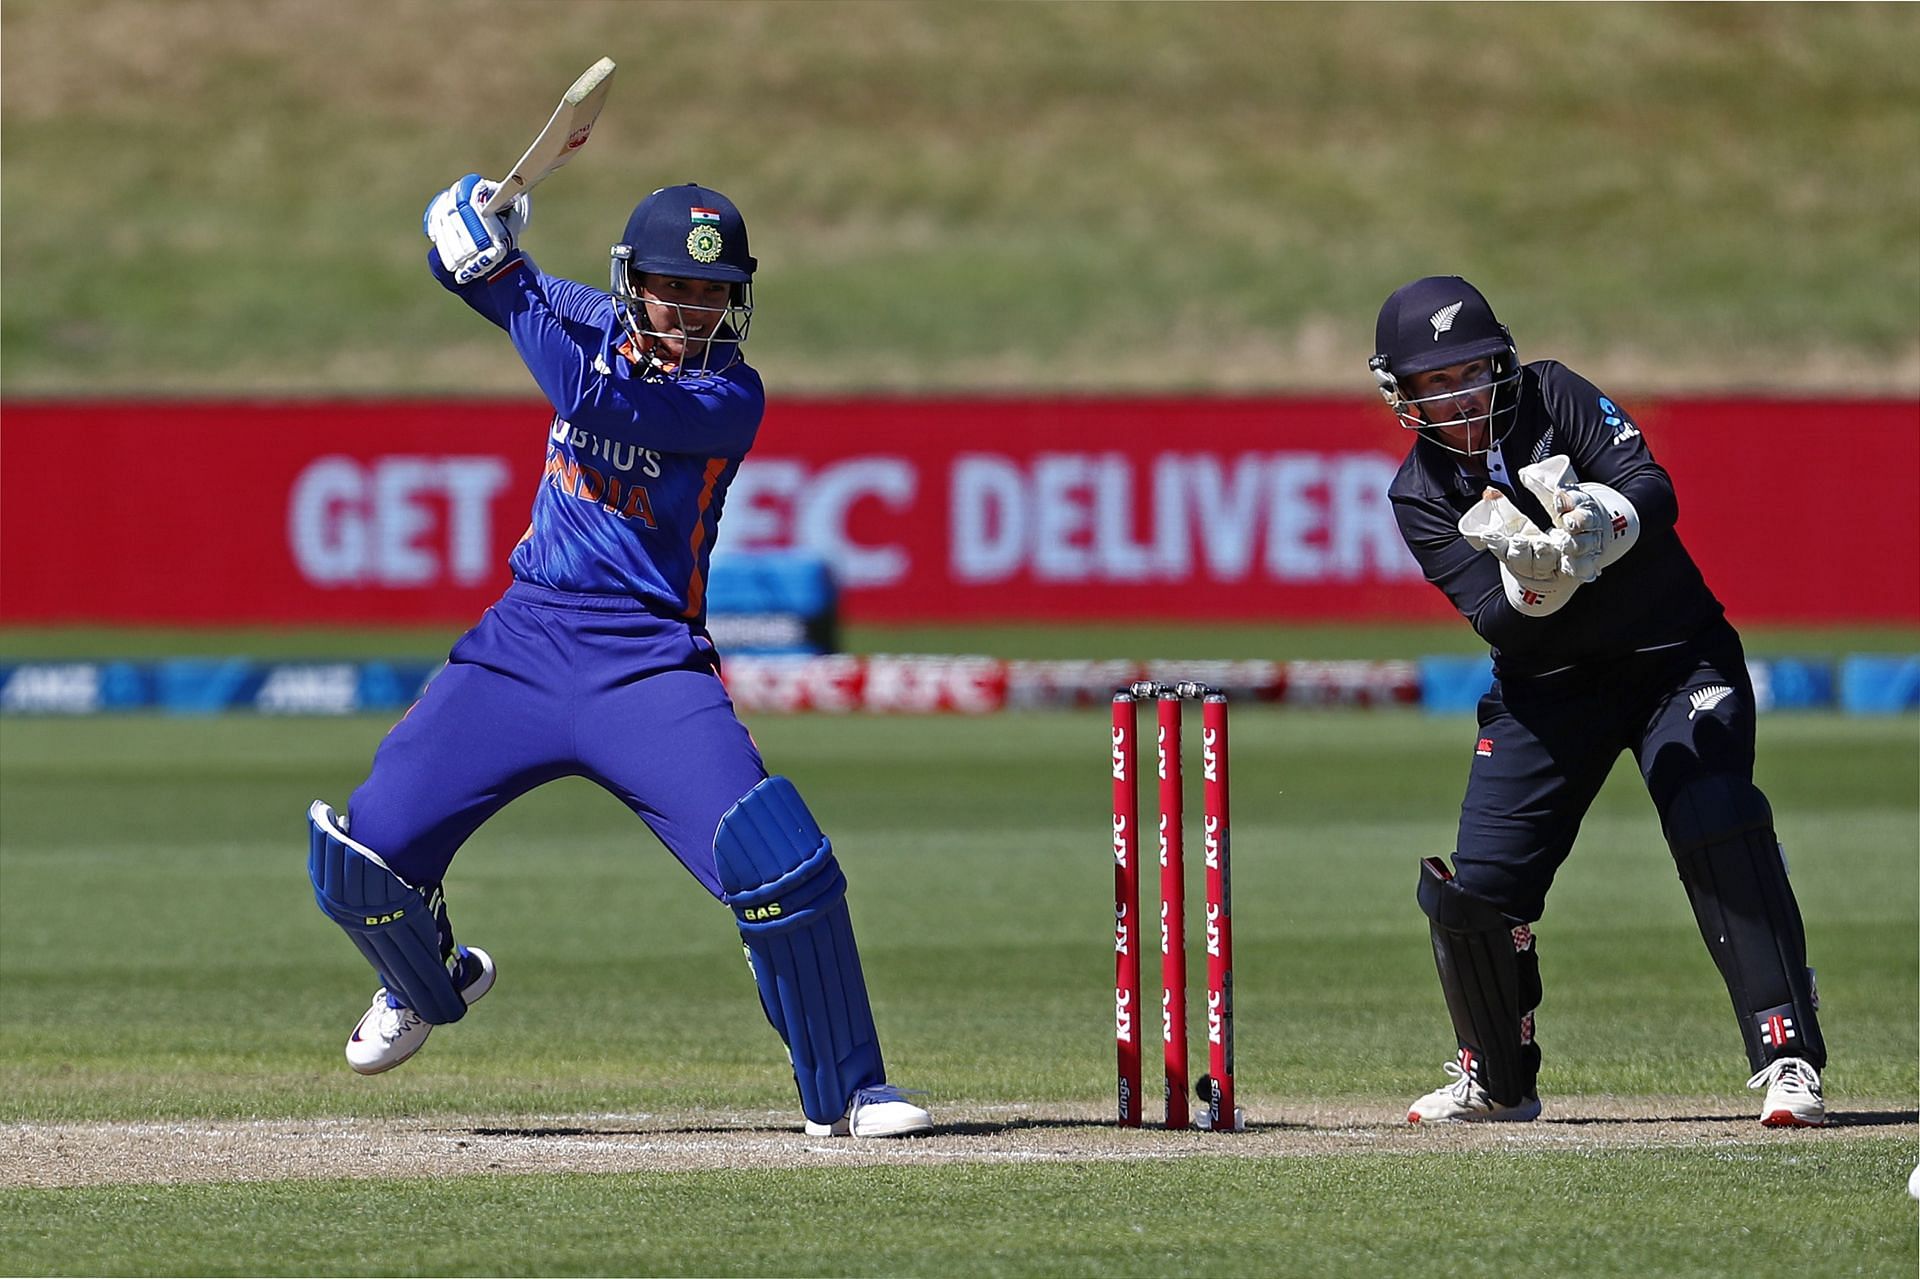 Smriti Mandhana will be a key player in the India vs New Zealand clash